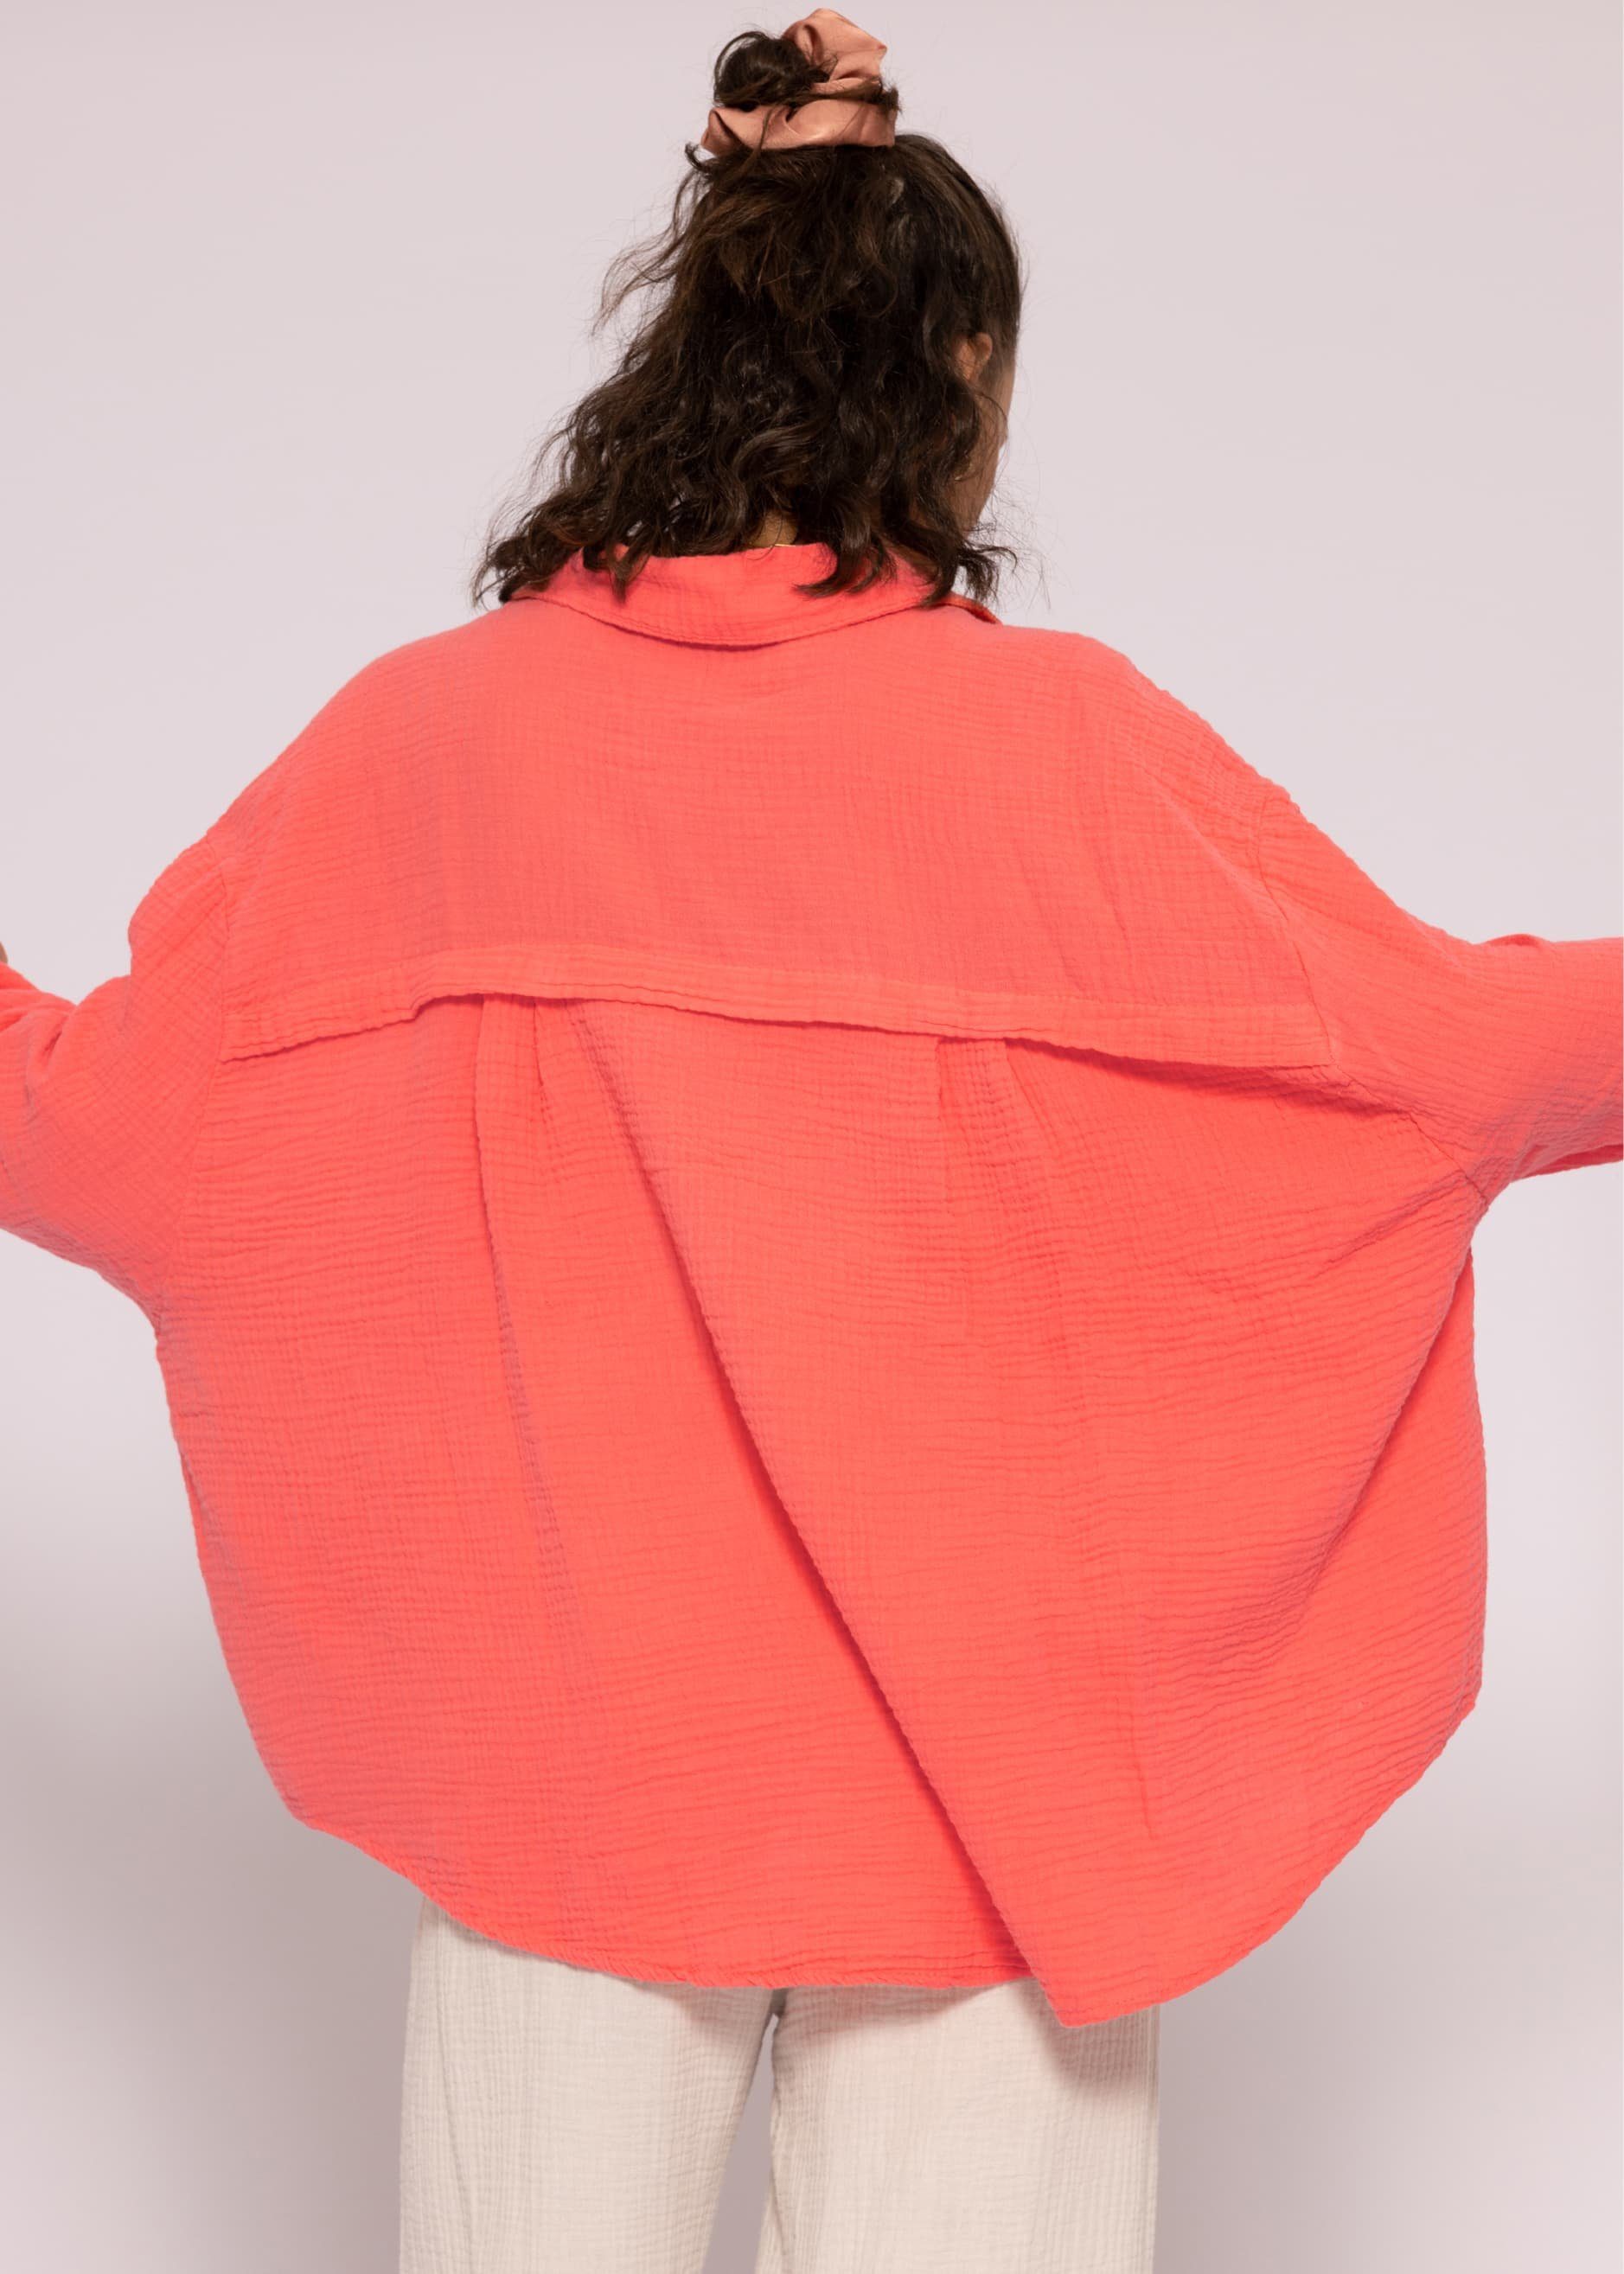 Langarm Oversize Koralle aus Hemdbluse Damen lang Baumwolle SASSYCLASSY mit V-Ausschnitt Longbluse Musselin Bluse